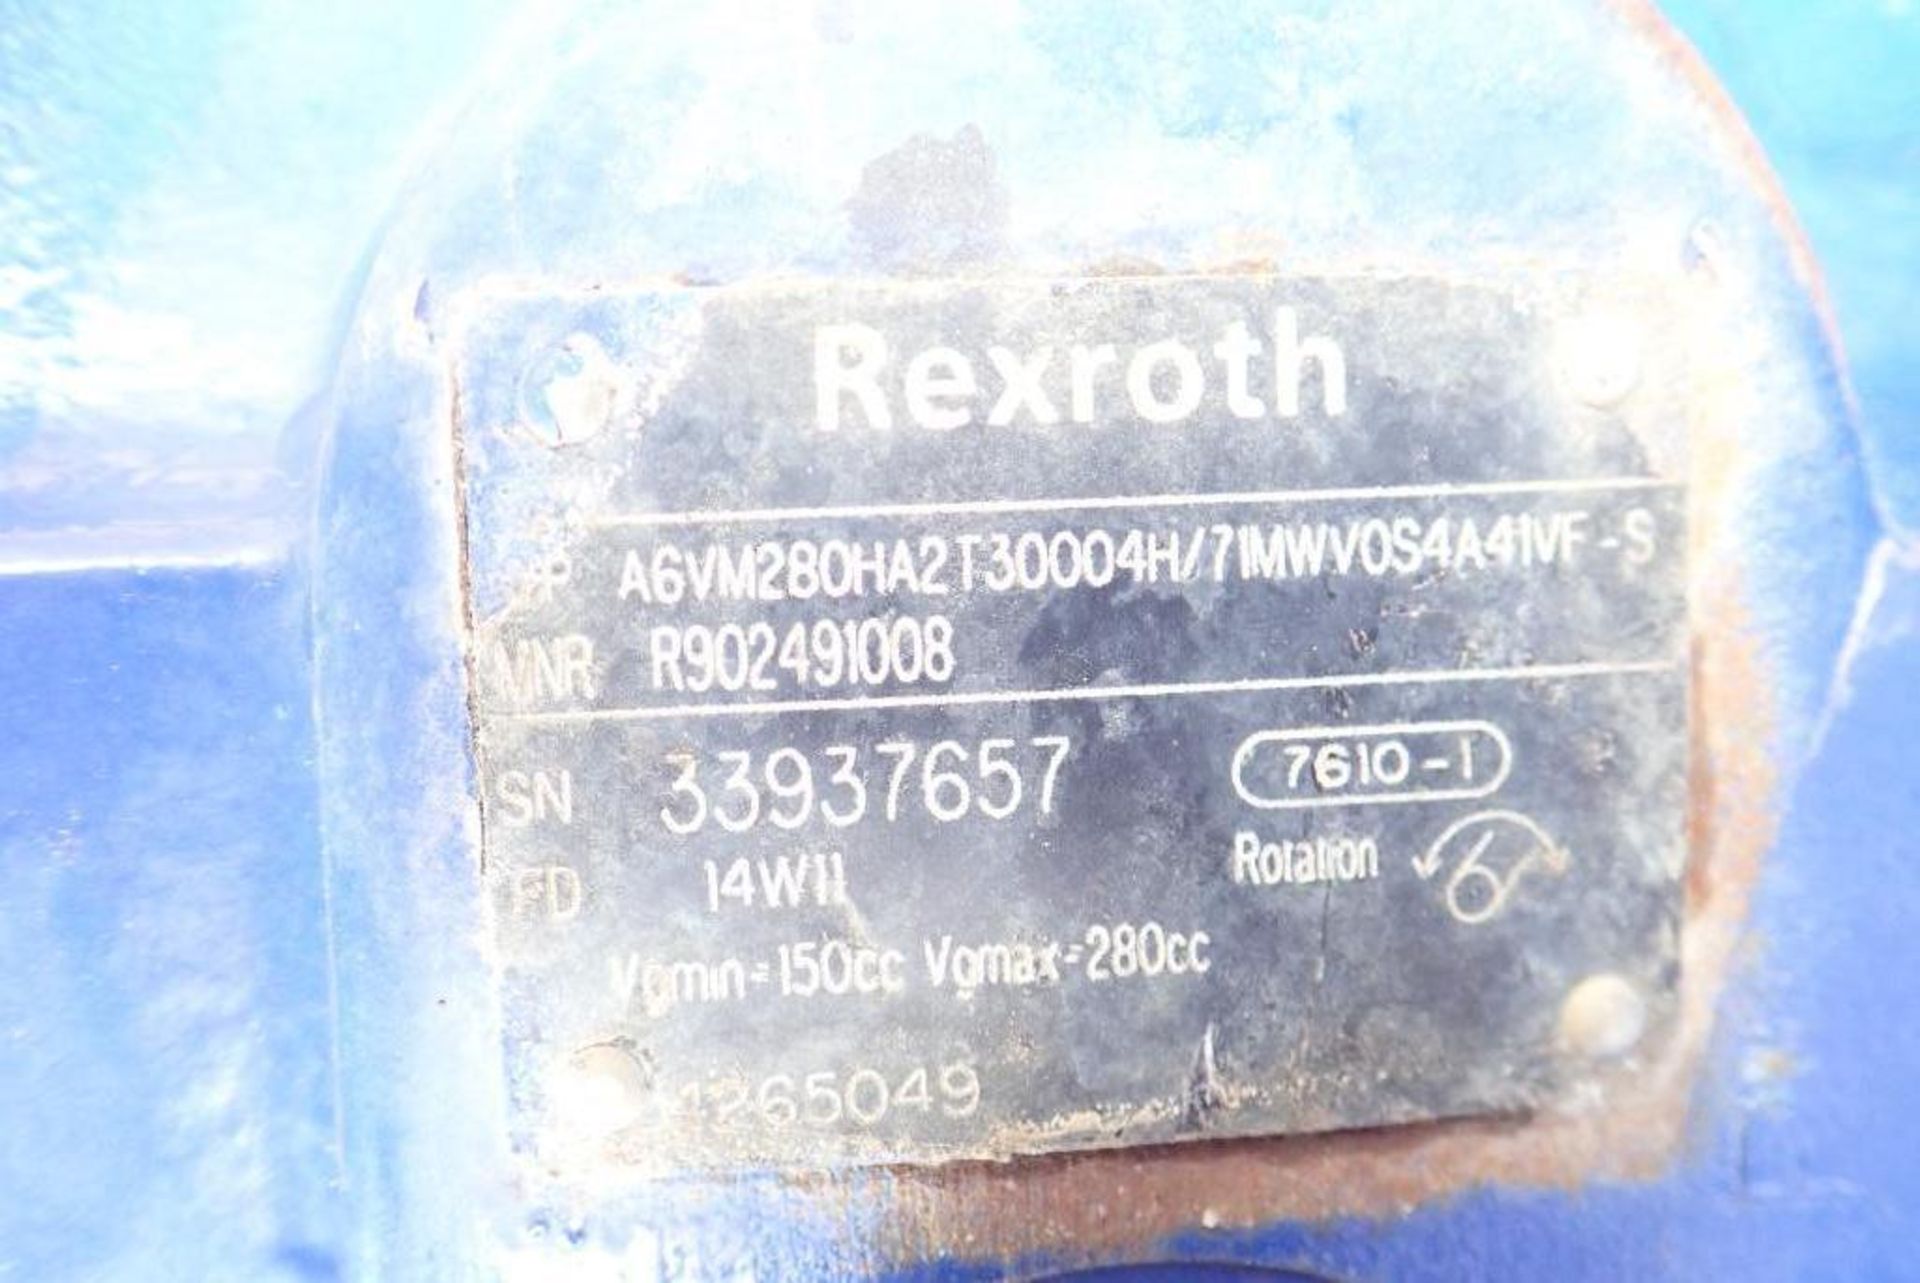 Rexroth 7610-7 Hydraulic Winch. - Image 3 of 3